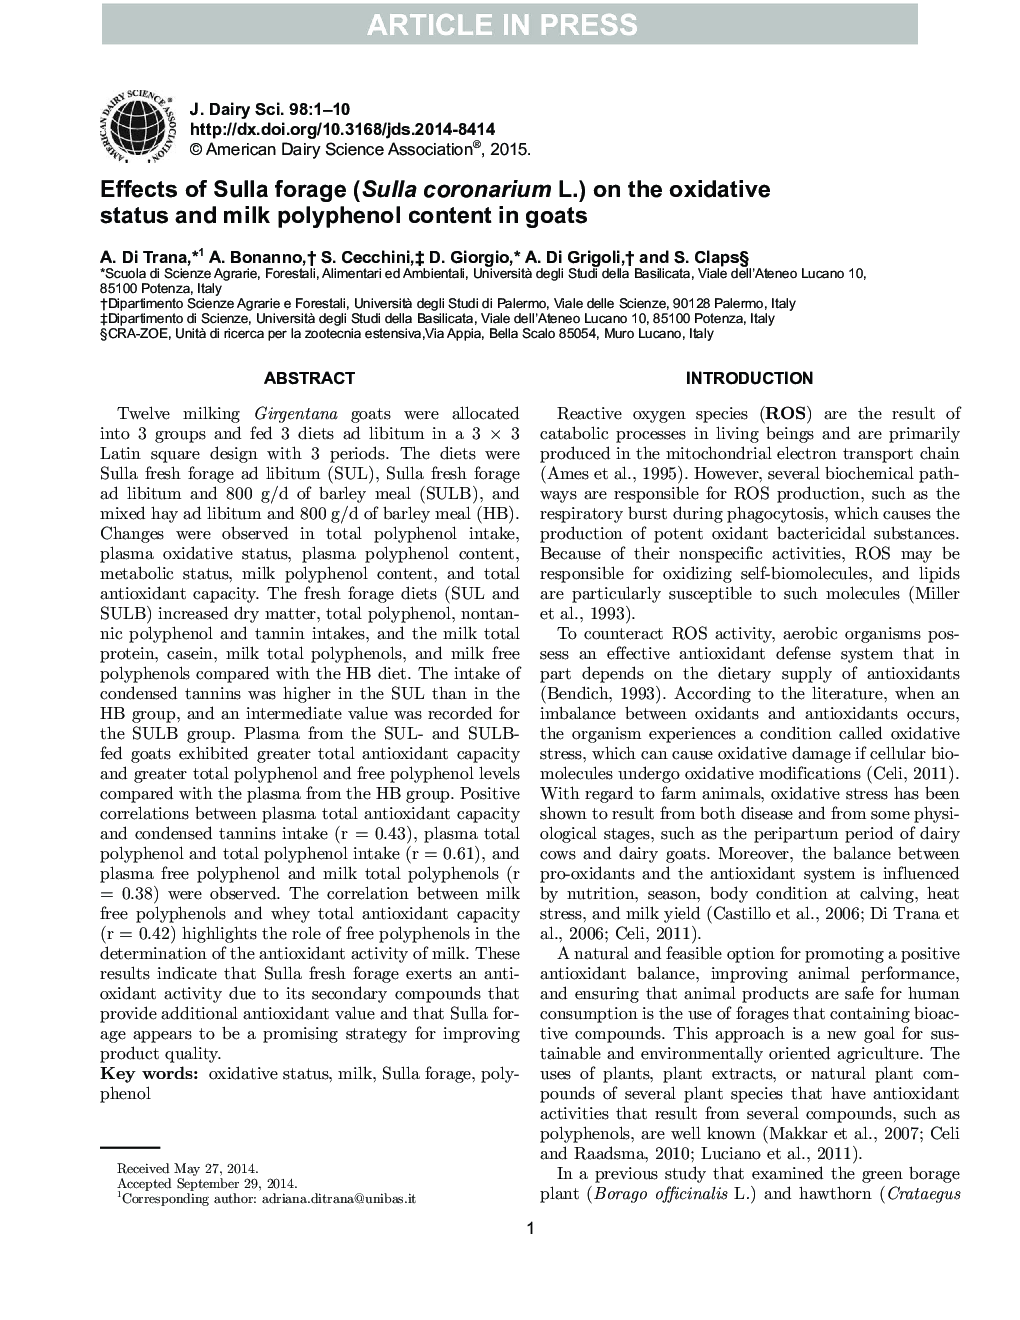 Effects of Sulla forage (Sulla coronarium L.) on the oxidative status and milk polyphenol content in goats